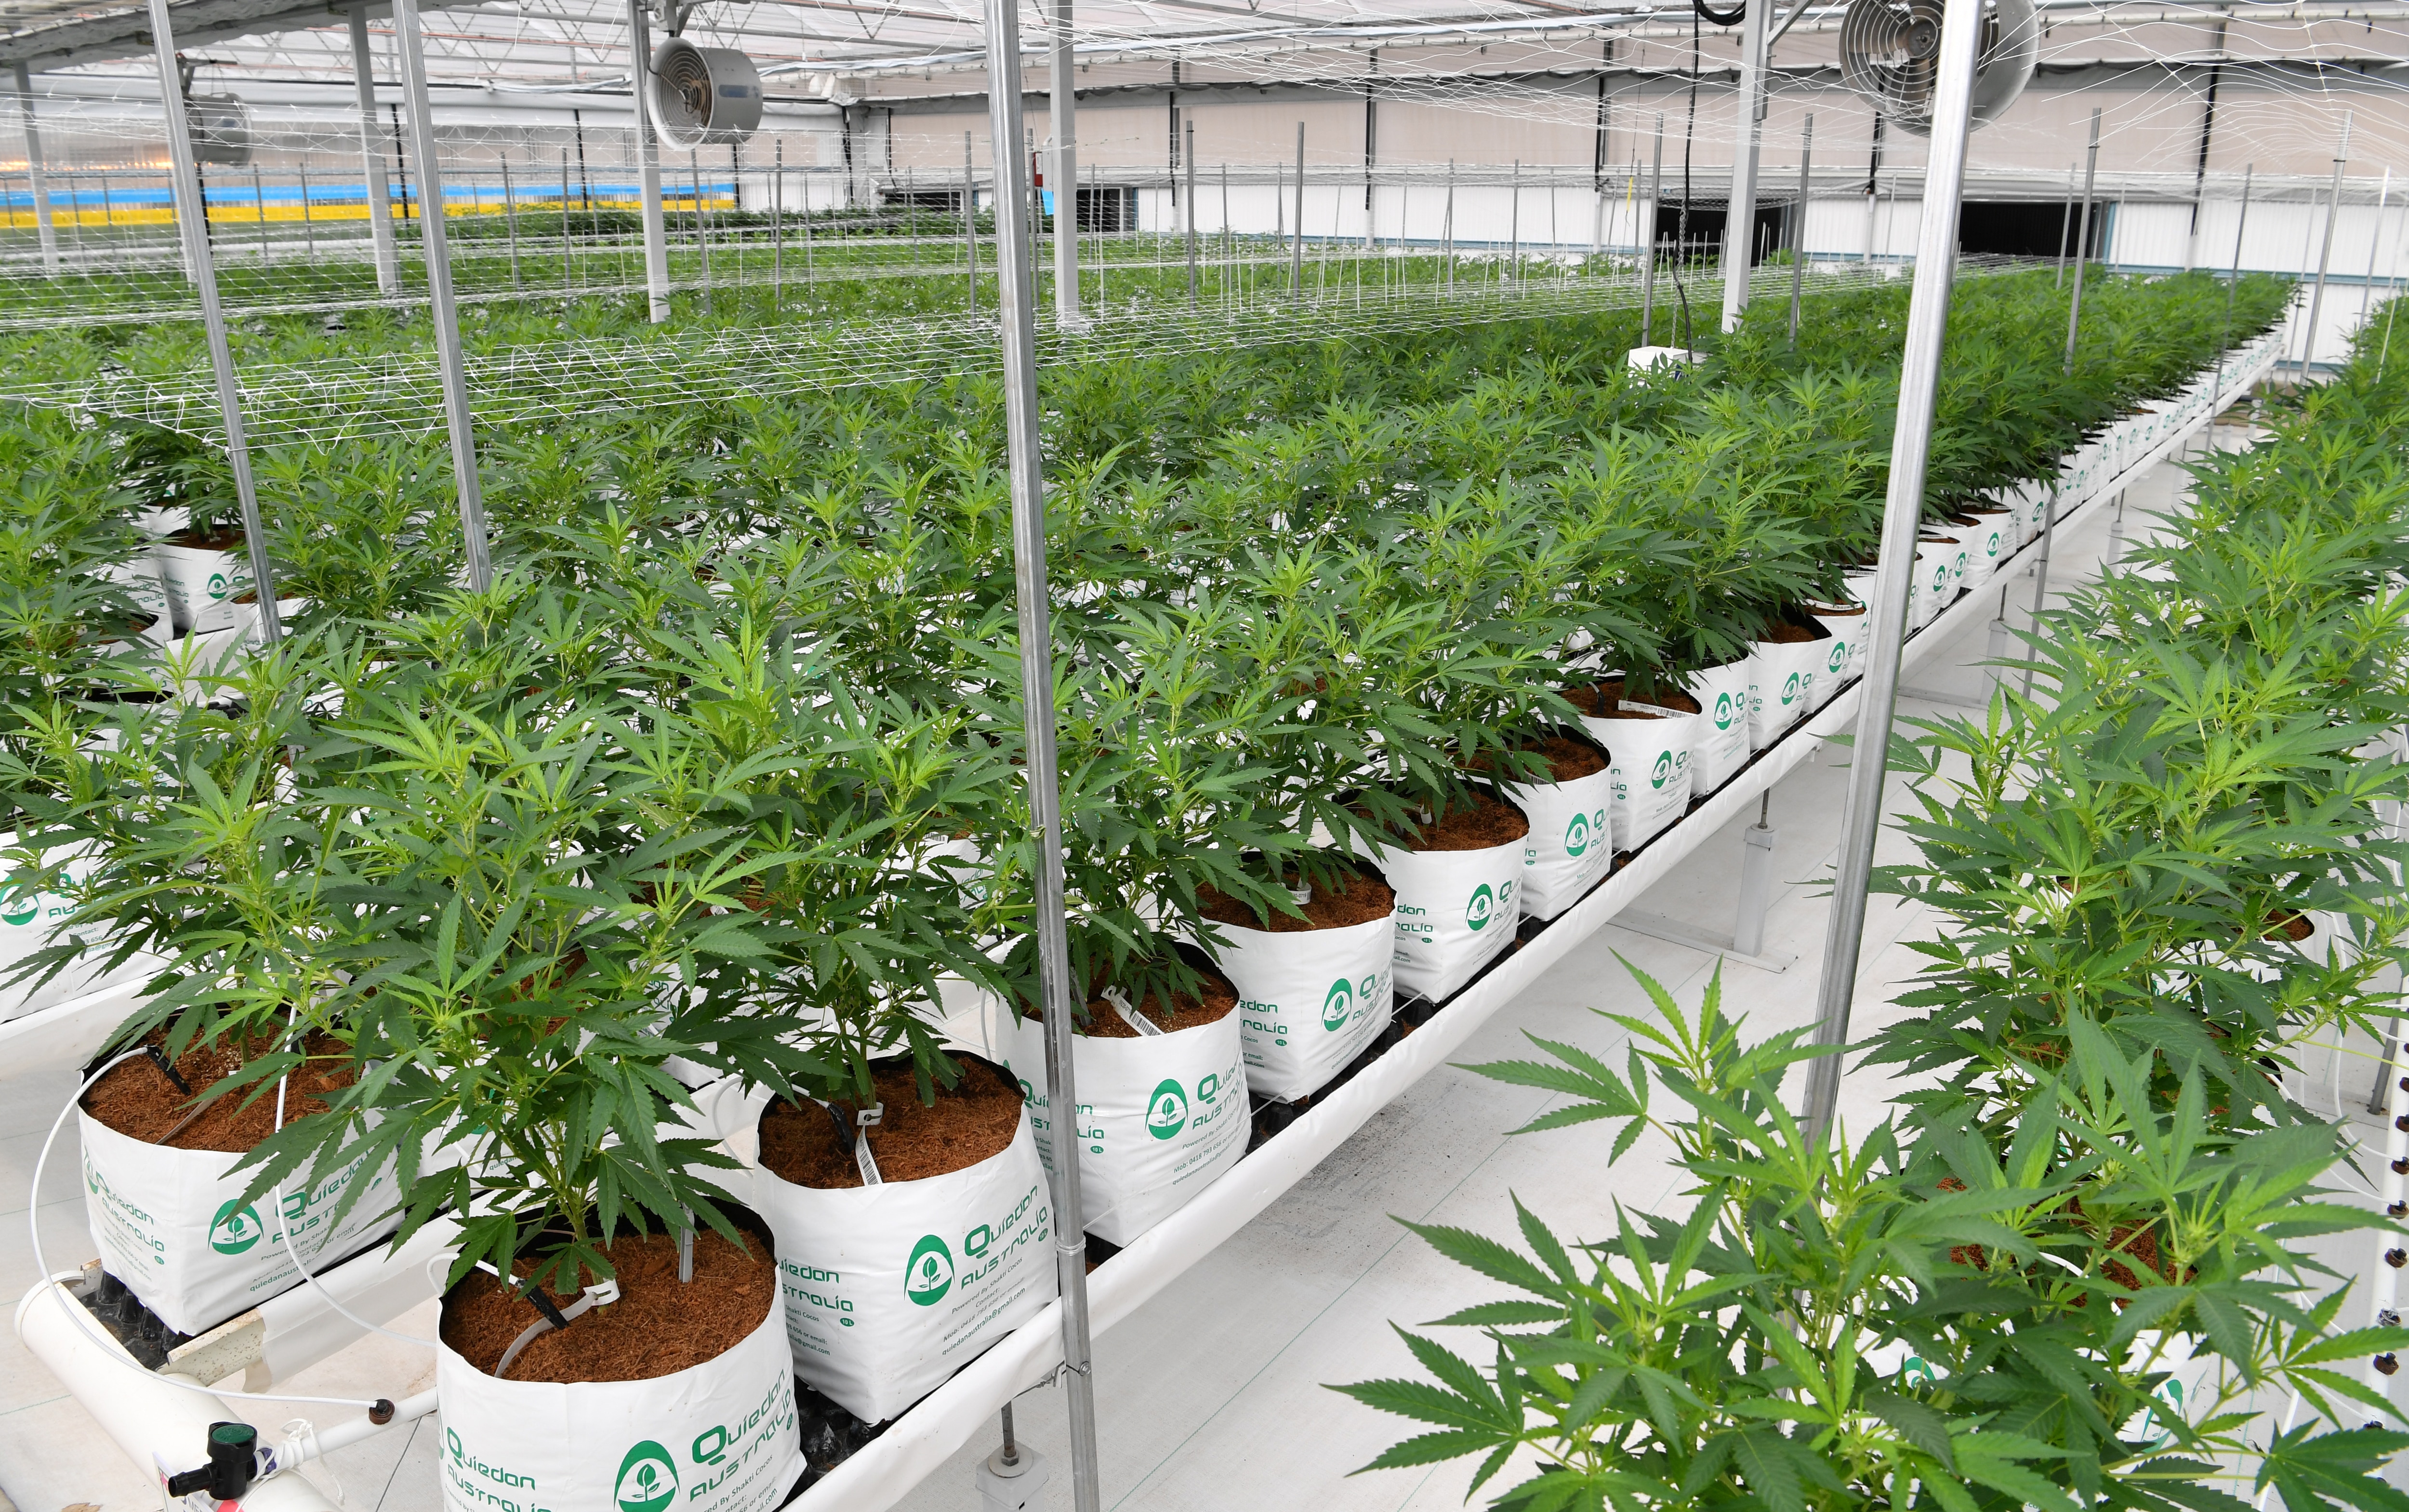 Medifarm is Australia's first operational medical cannabis farm.